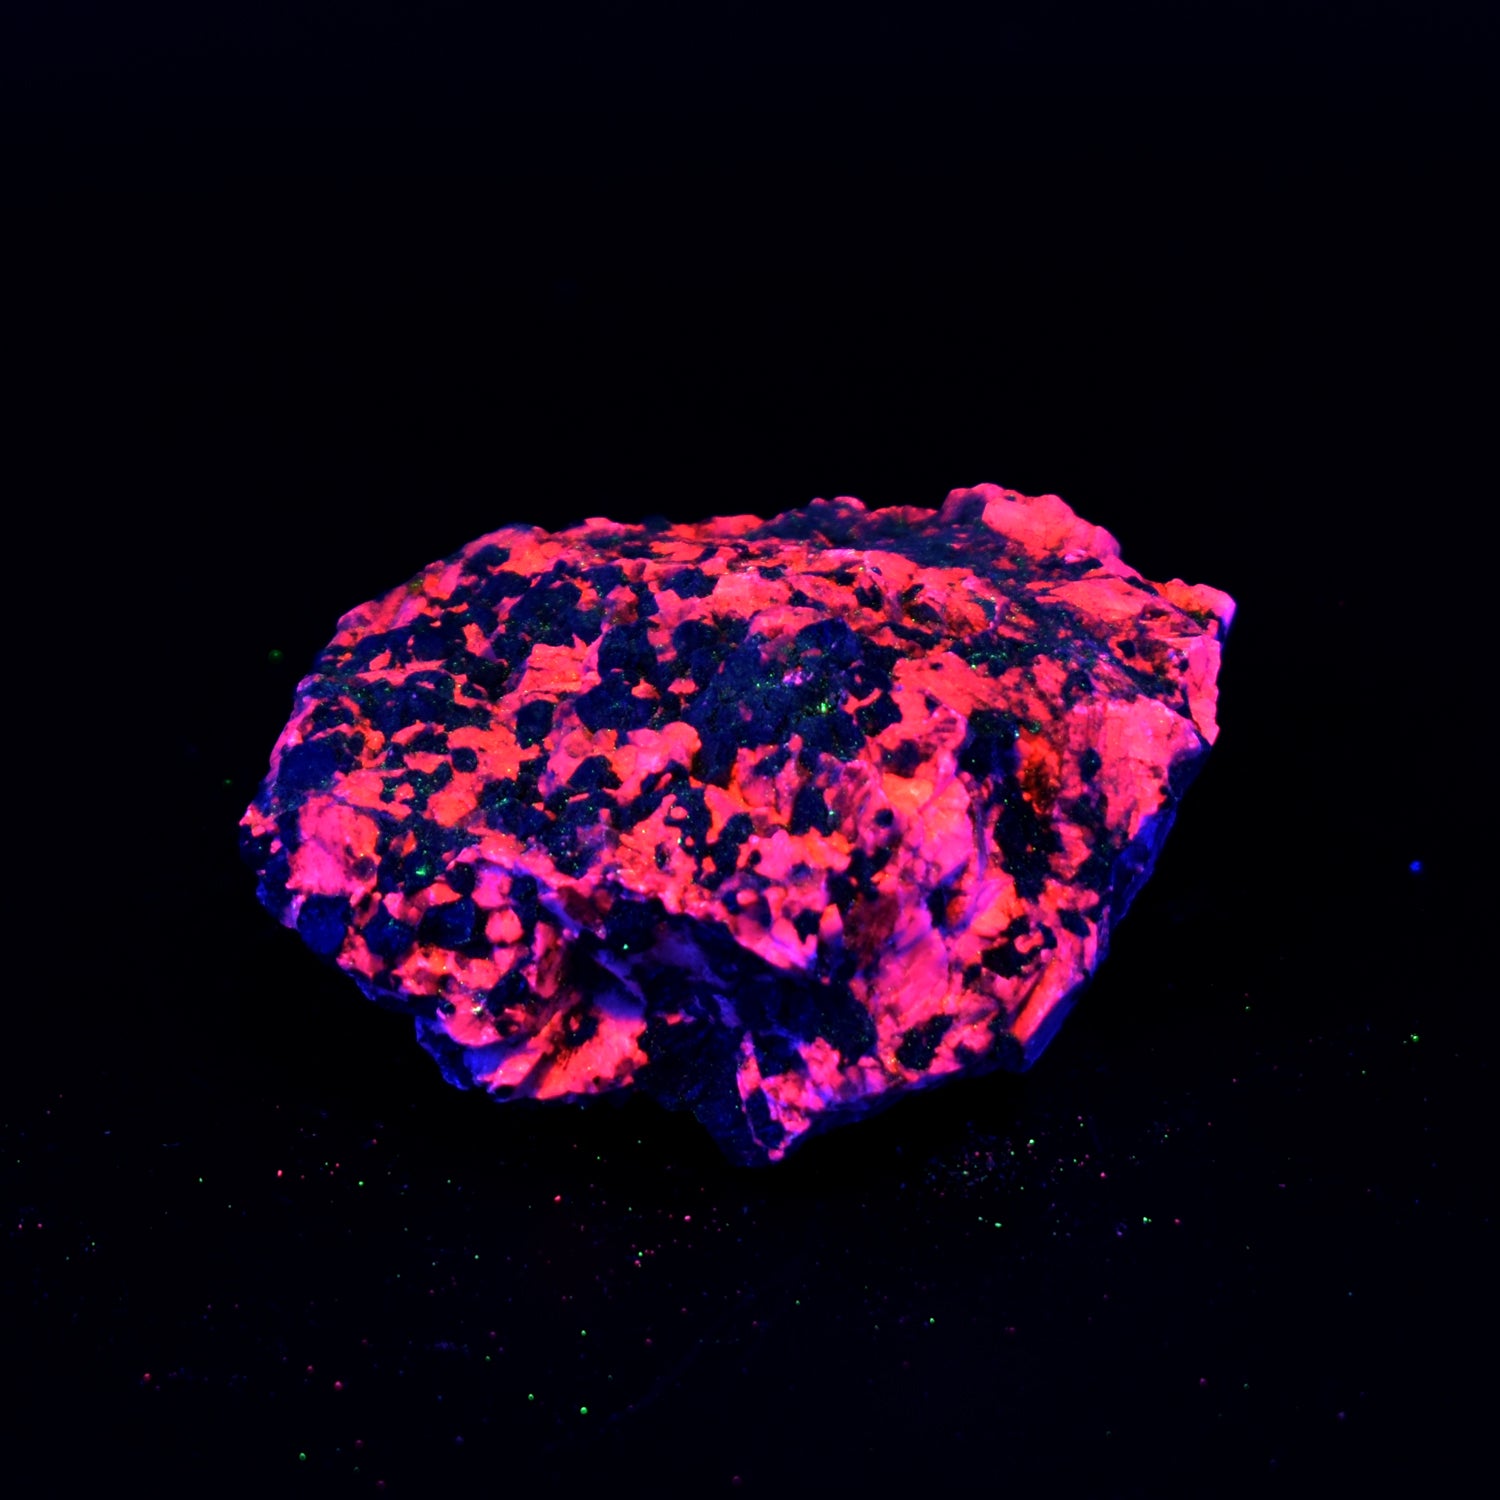 Calcite Fluorescent Mineral Specimen (4.7 Oz)